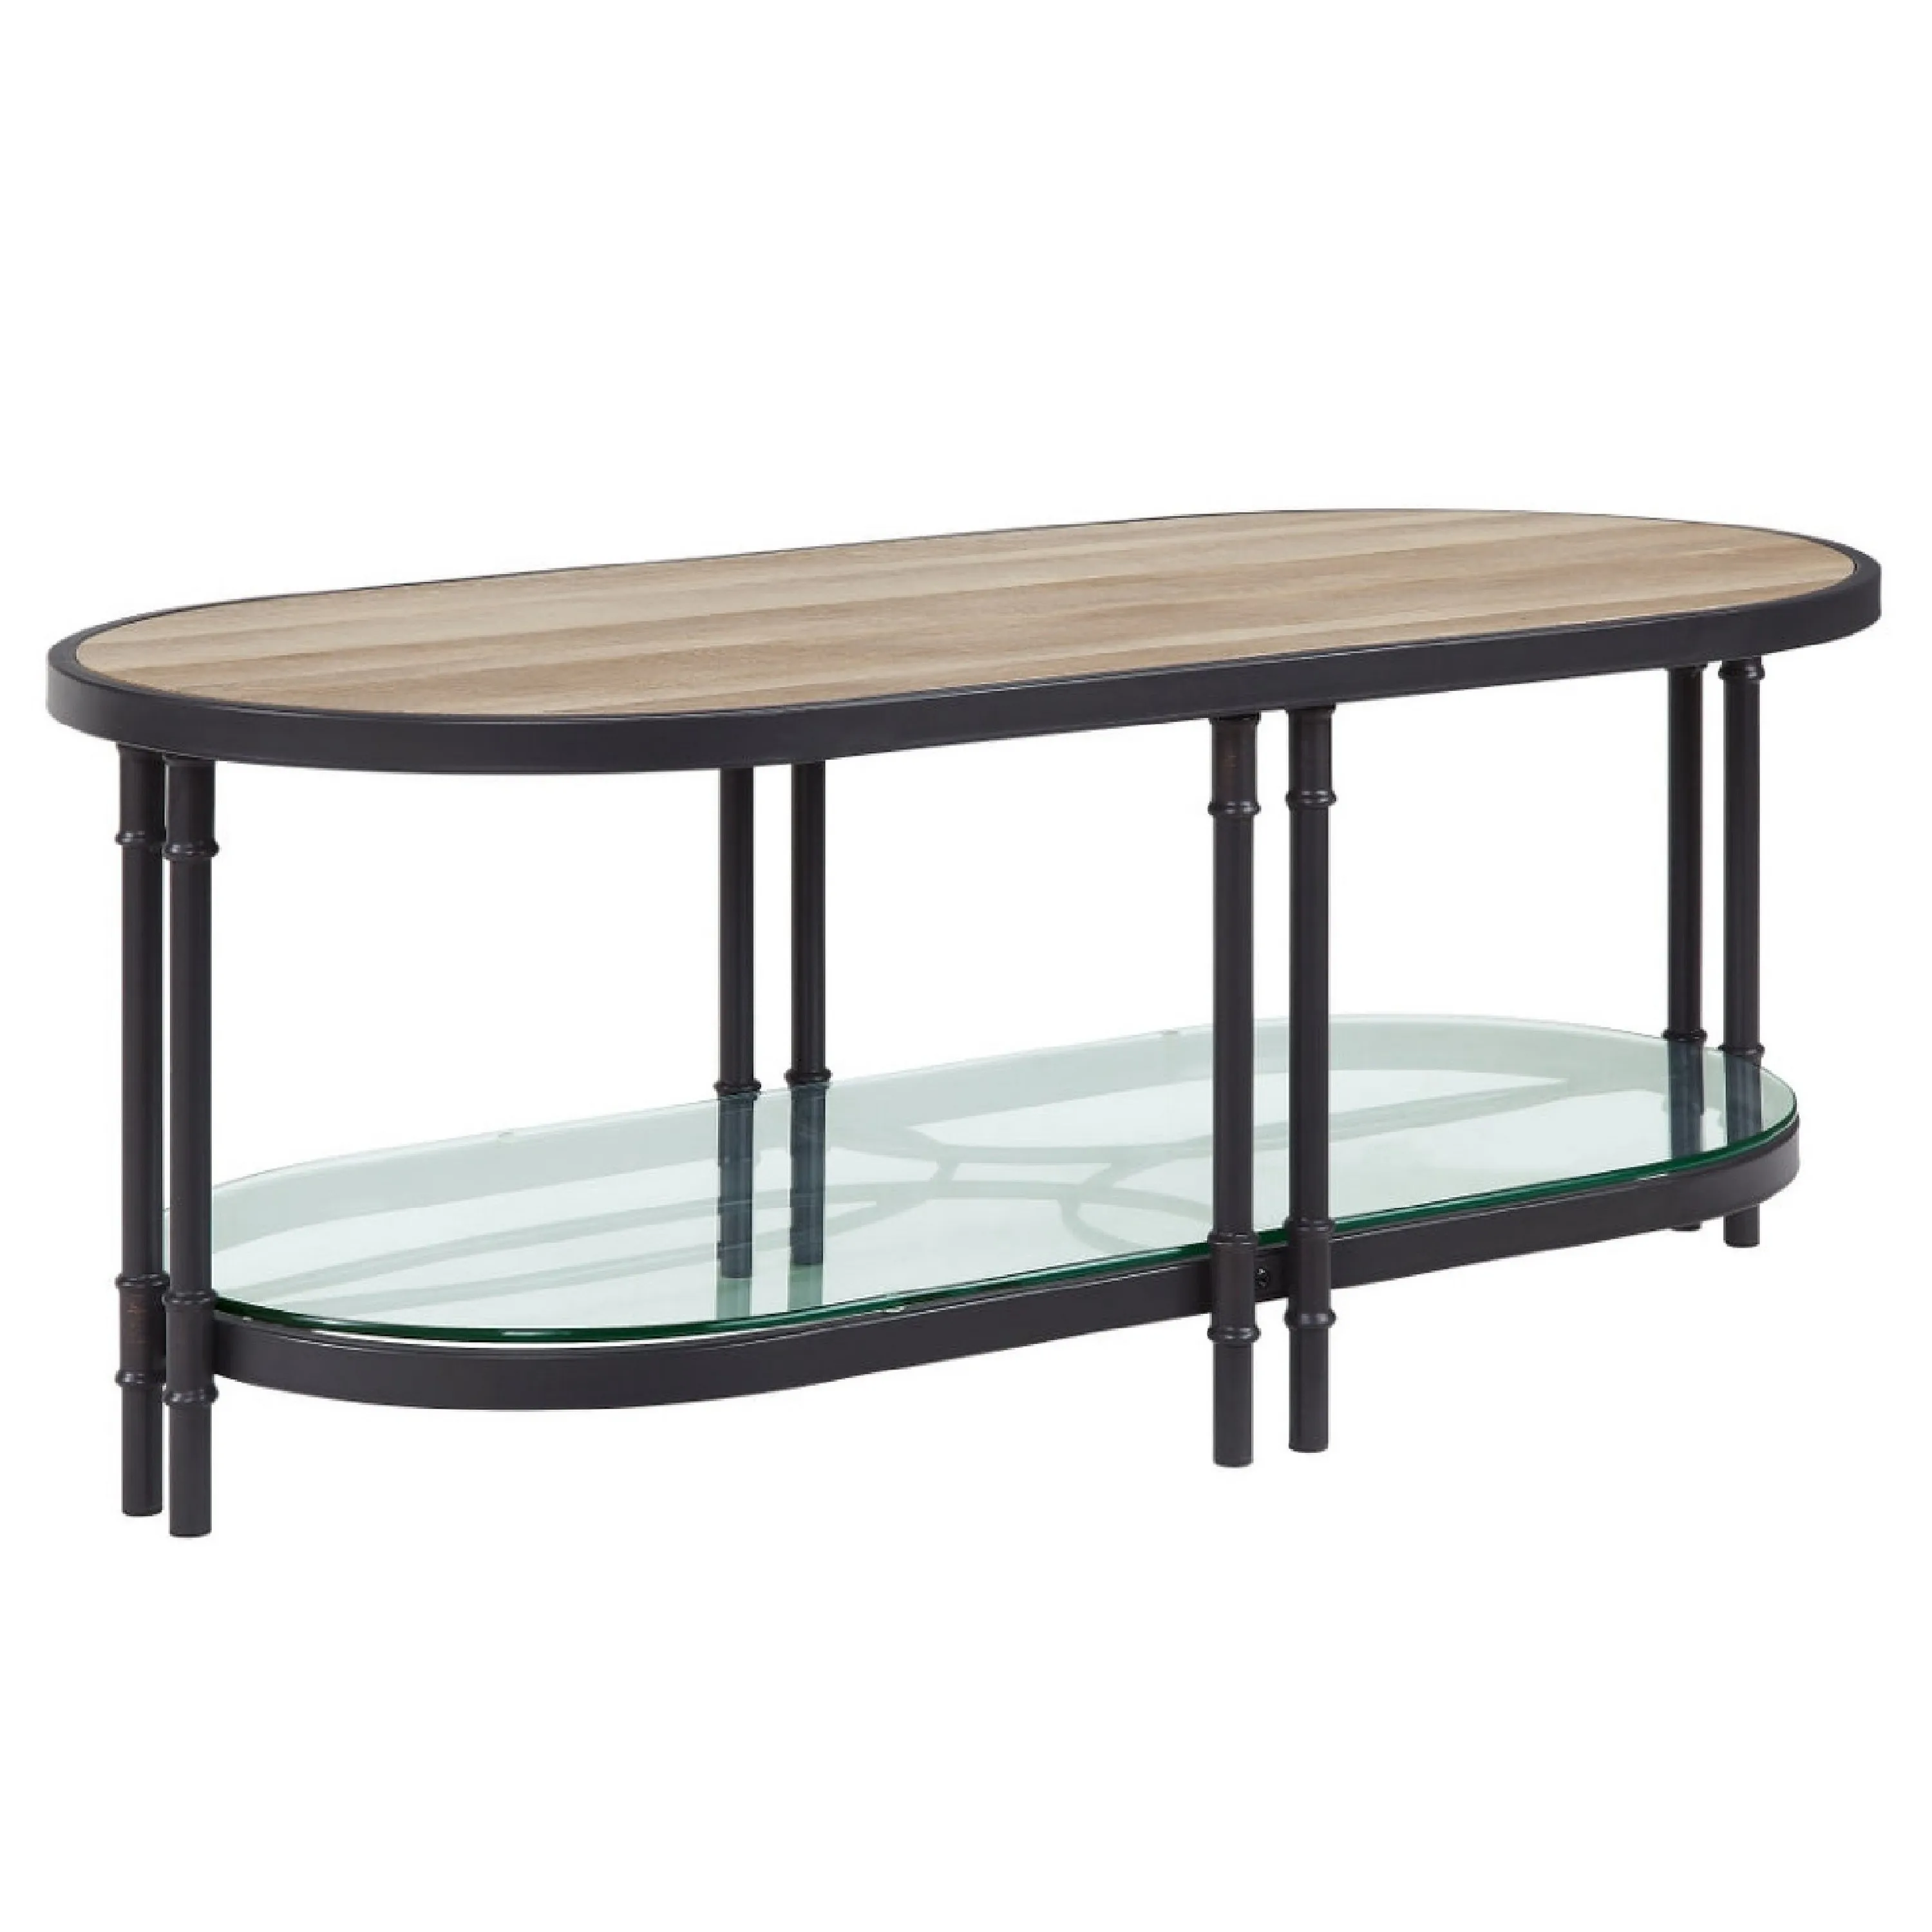 Ley 47 Inch Wood Coffee Table, Oblong, Industrial Design, Oak-Benzara